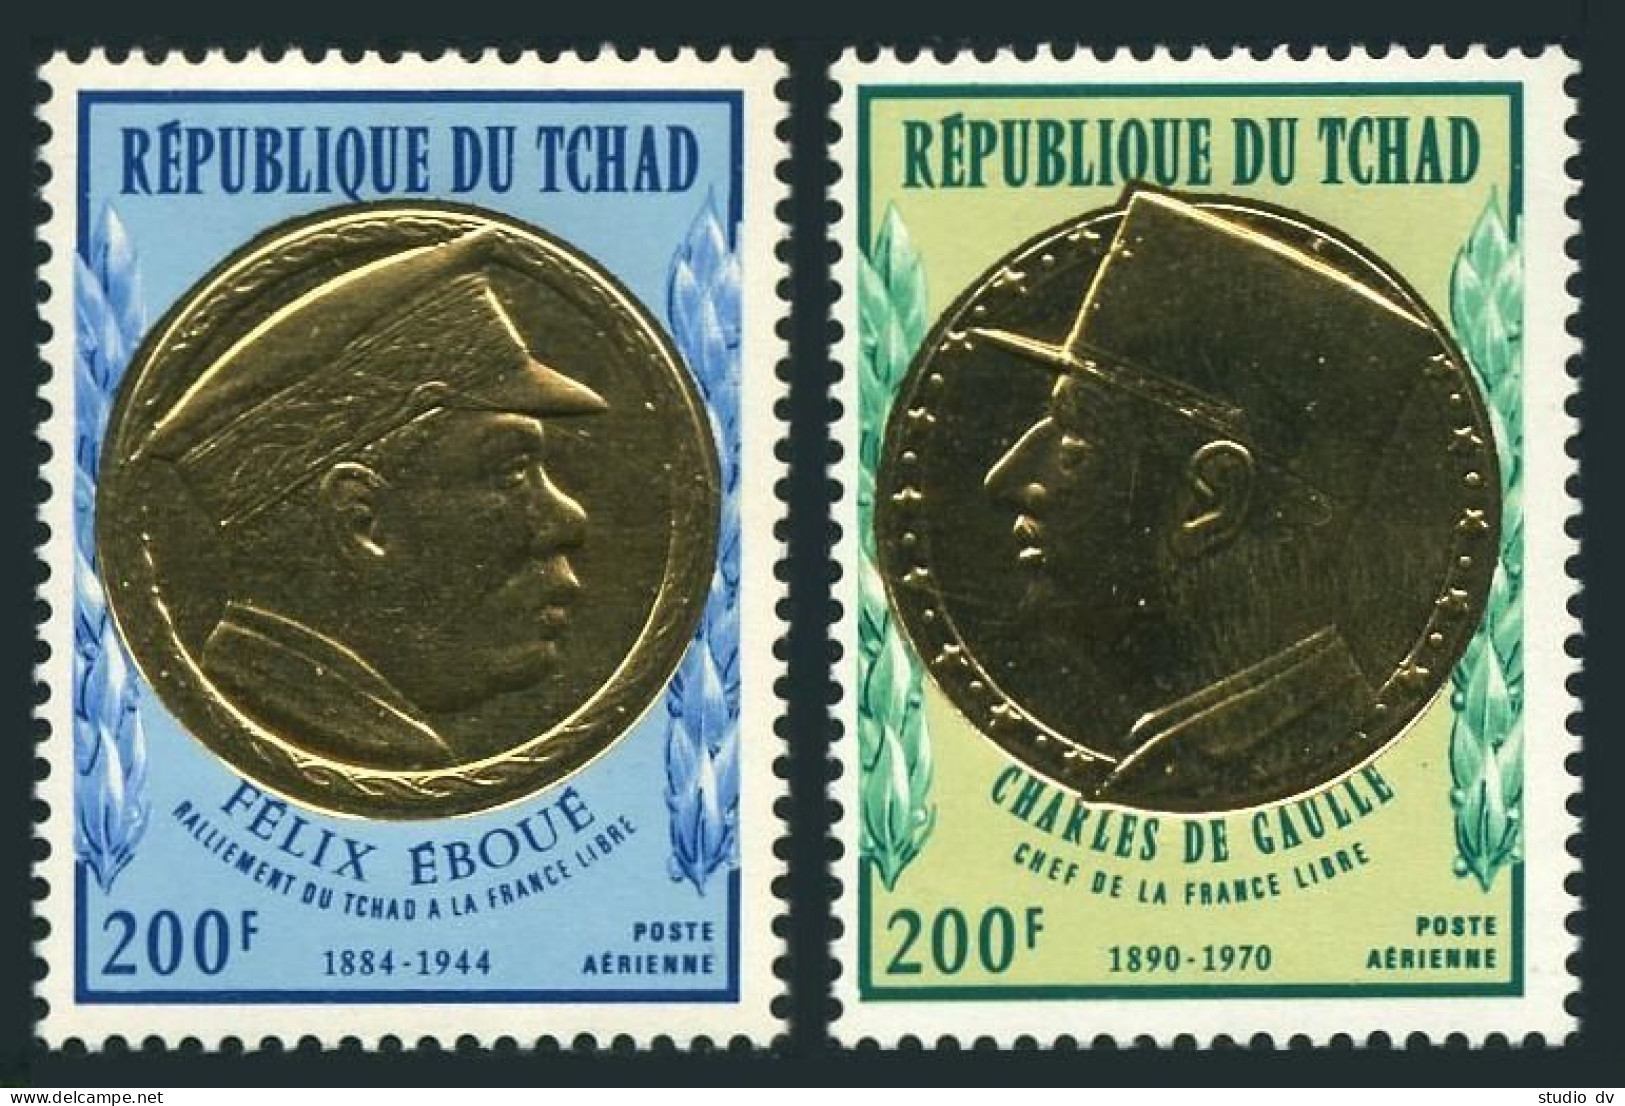 Chad C92-C93,hinged.Mi 424-425. Presidents Felix Eboue,Charles De Gaulle,1971. - Chad (1960-...)